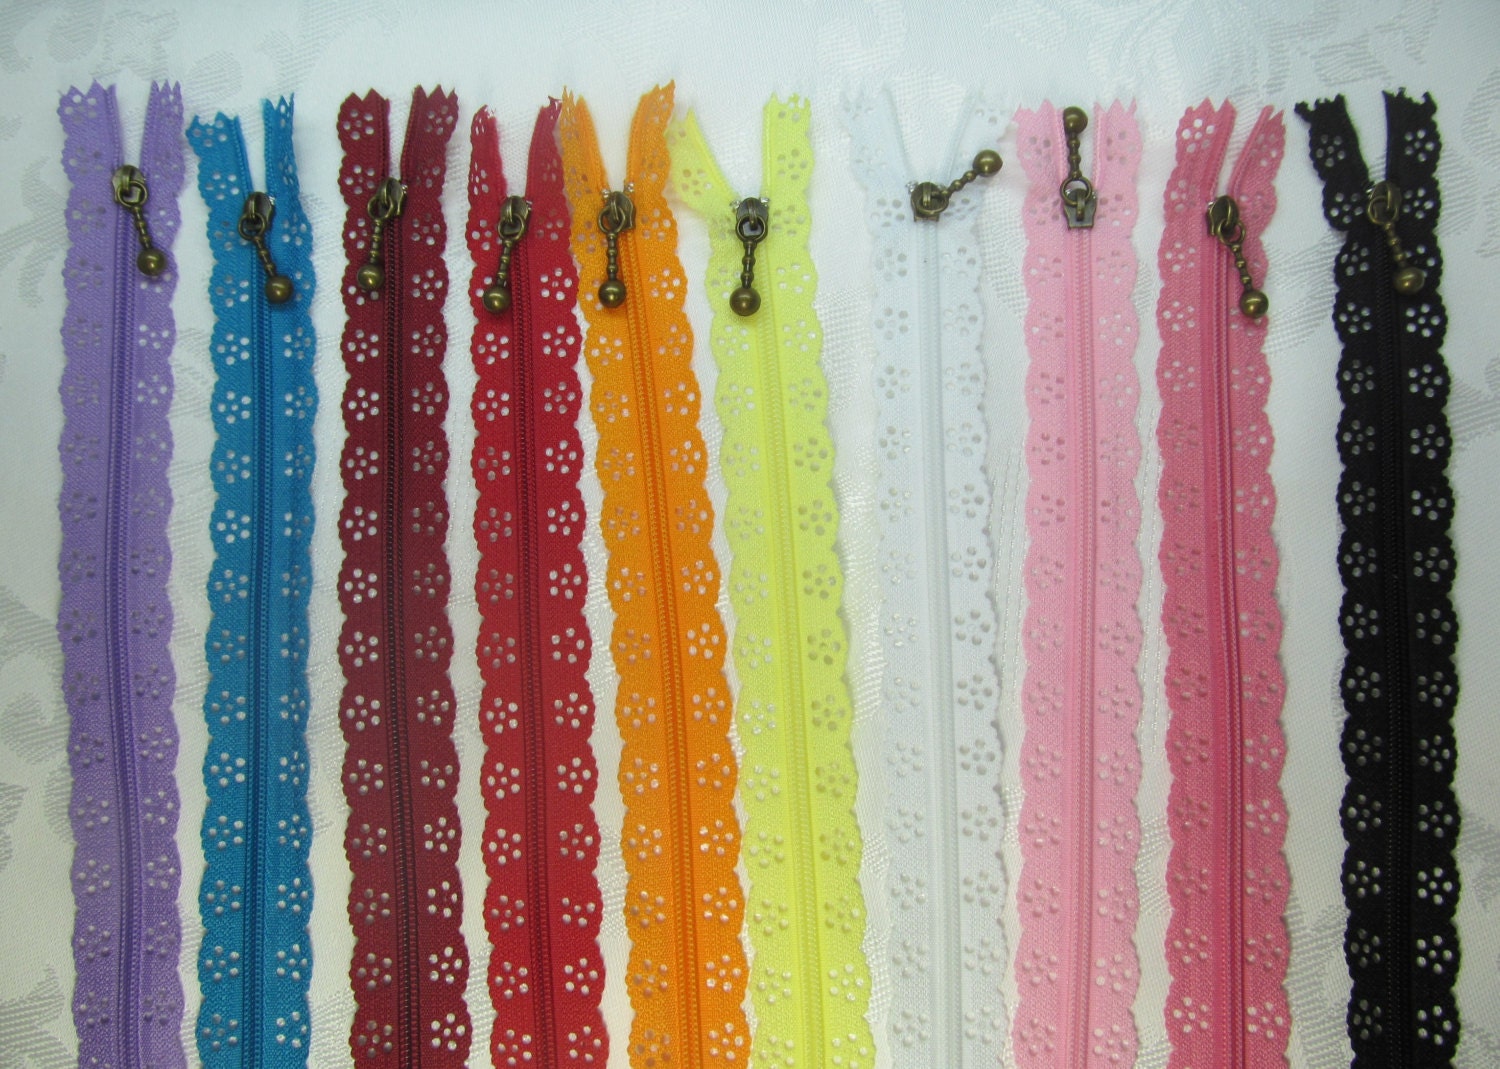 4 Zips Lace Edged Zipper Sewing Dressmaking 3 Lengths 20cm 30cm 50cm 24 Colours 